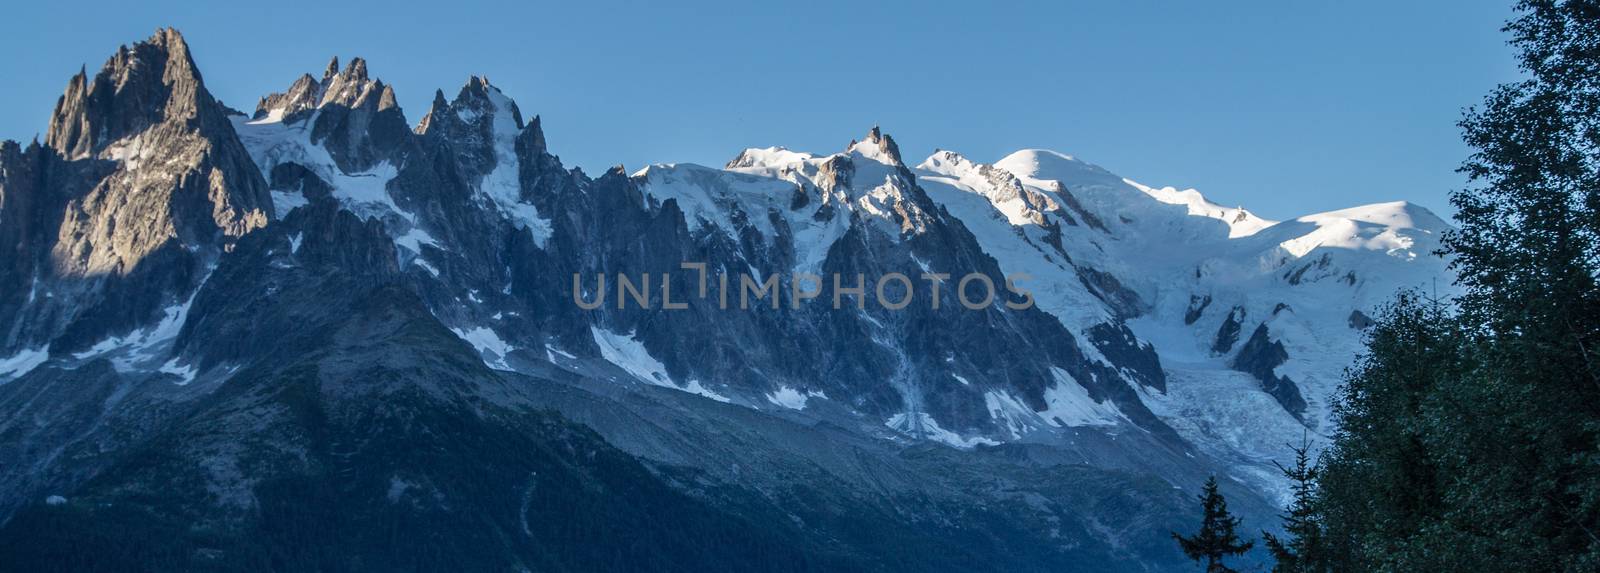 massif of mont blanc,chamonix,haute savoie,france by bertrand